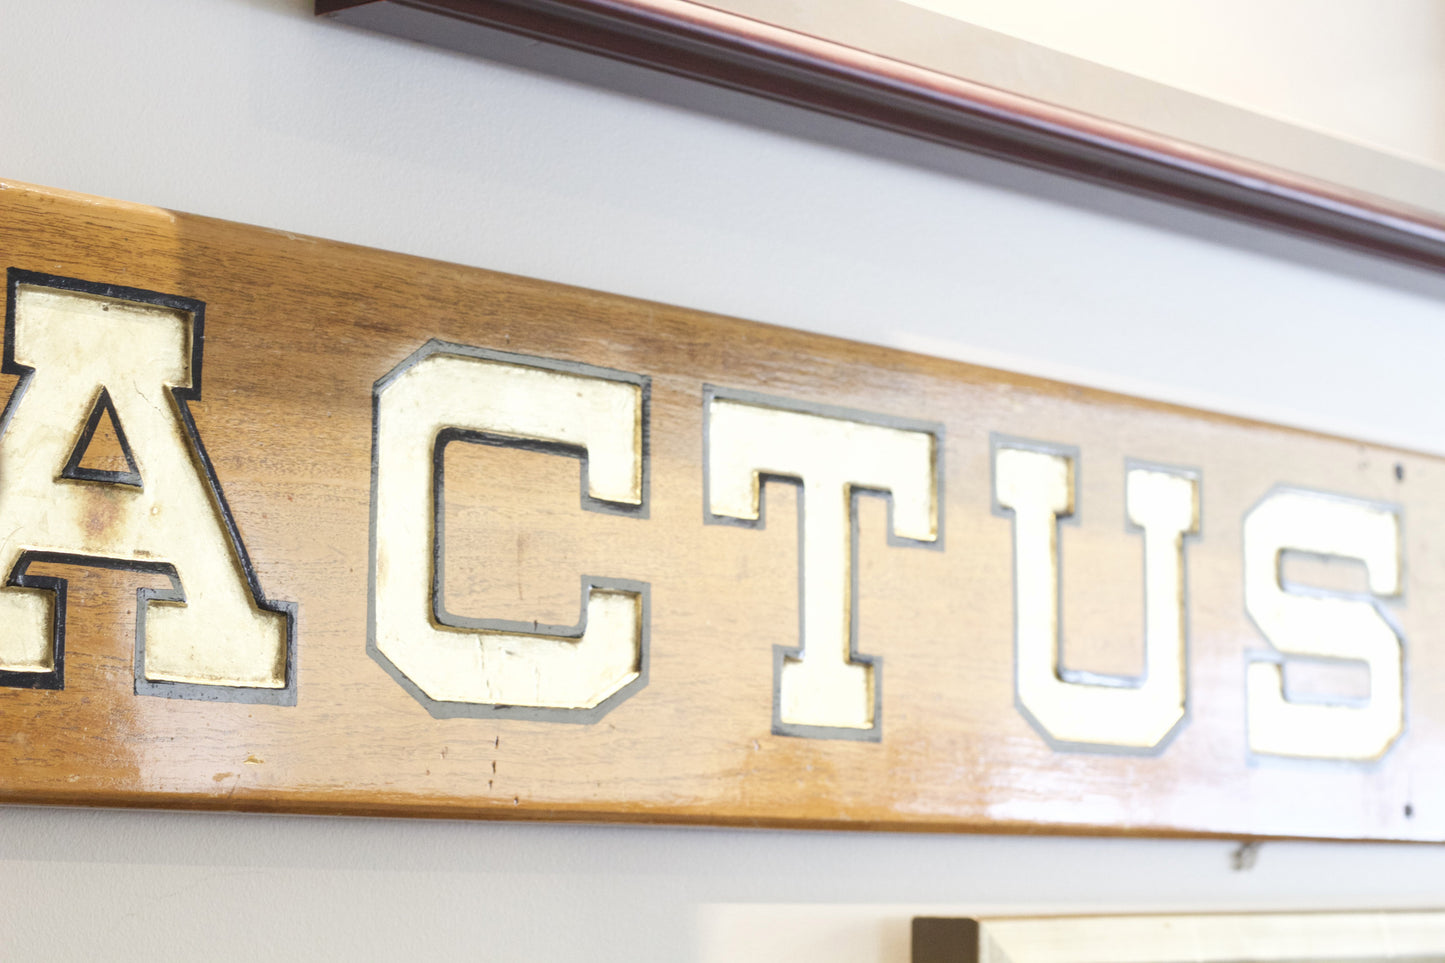 Yacht Actus Nameboard - Lannan Gallery